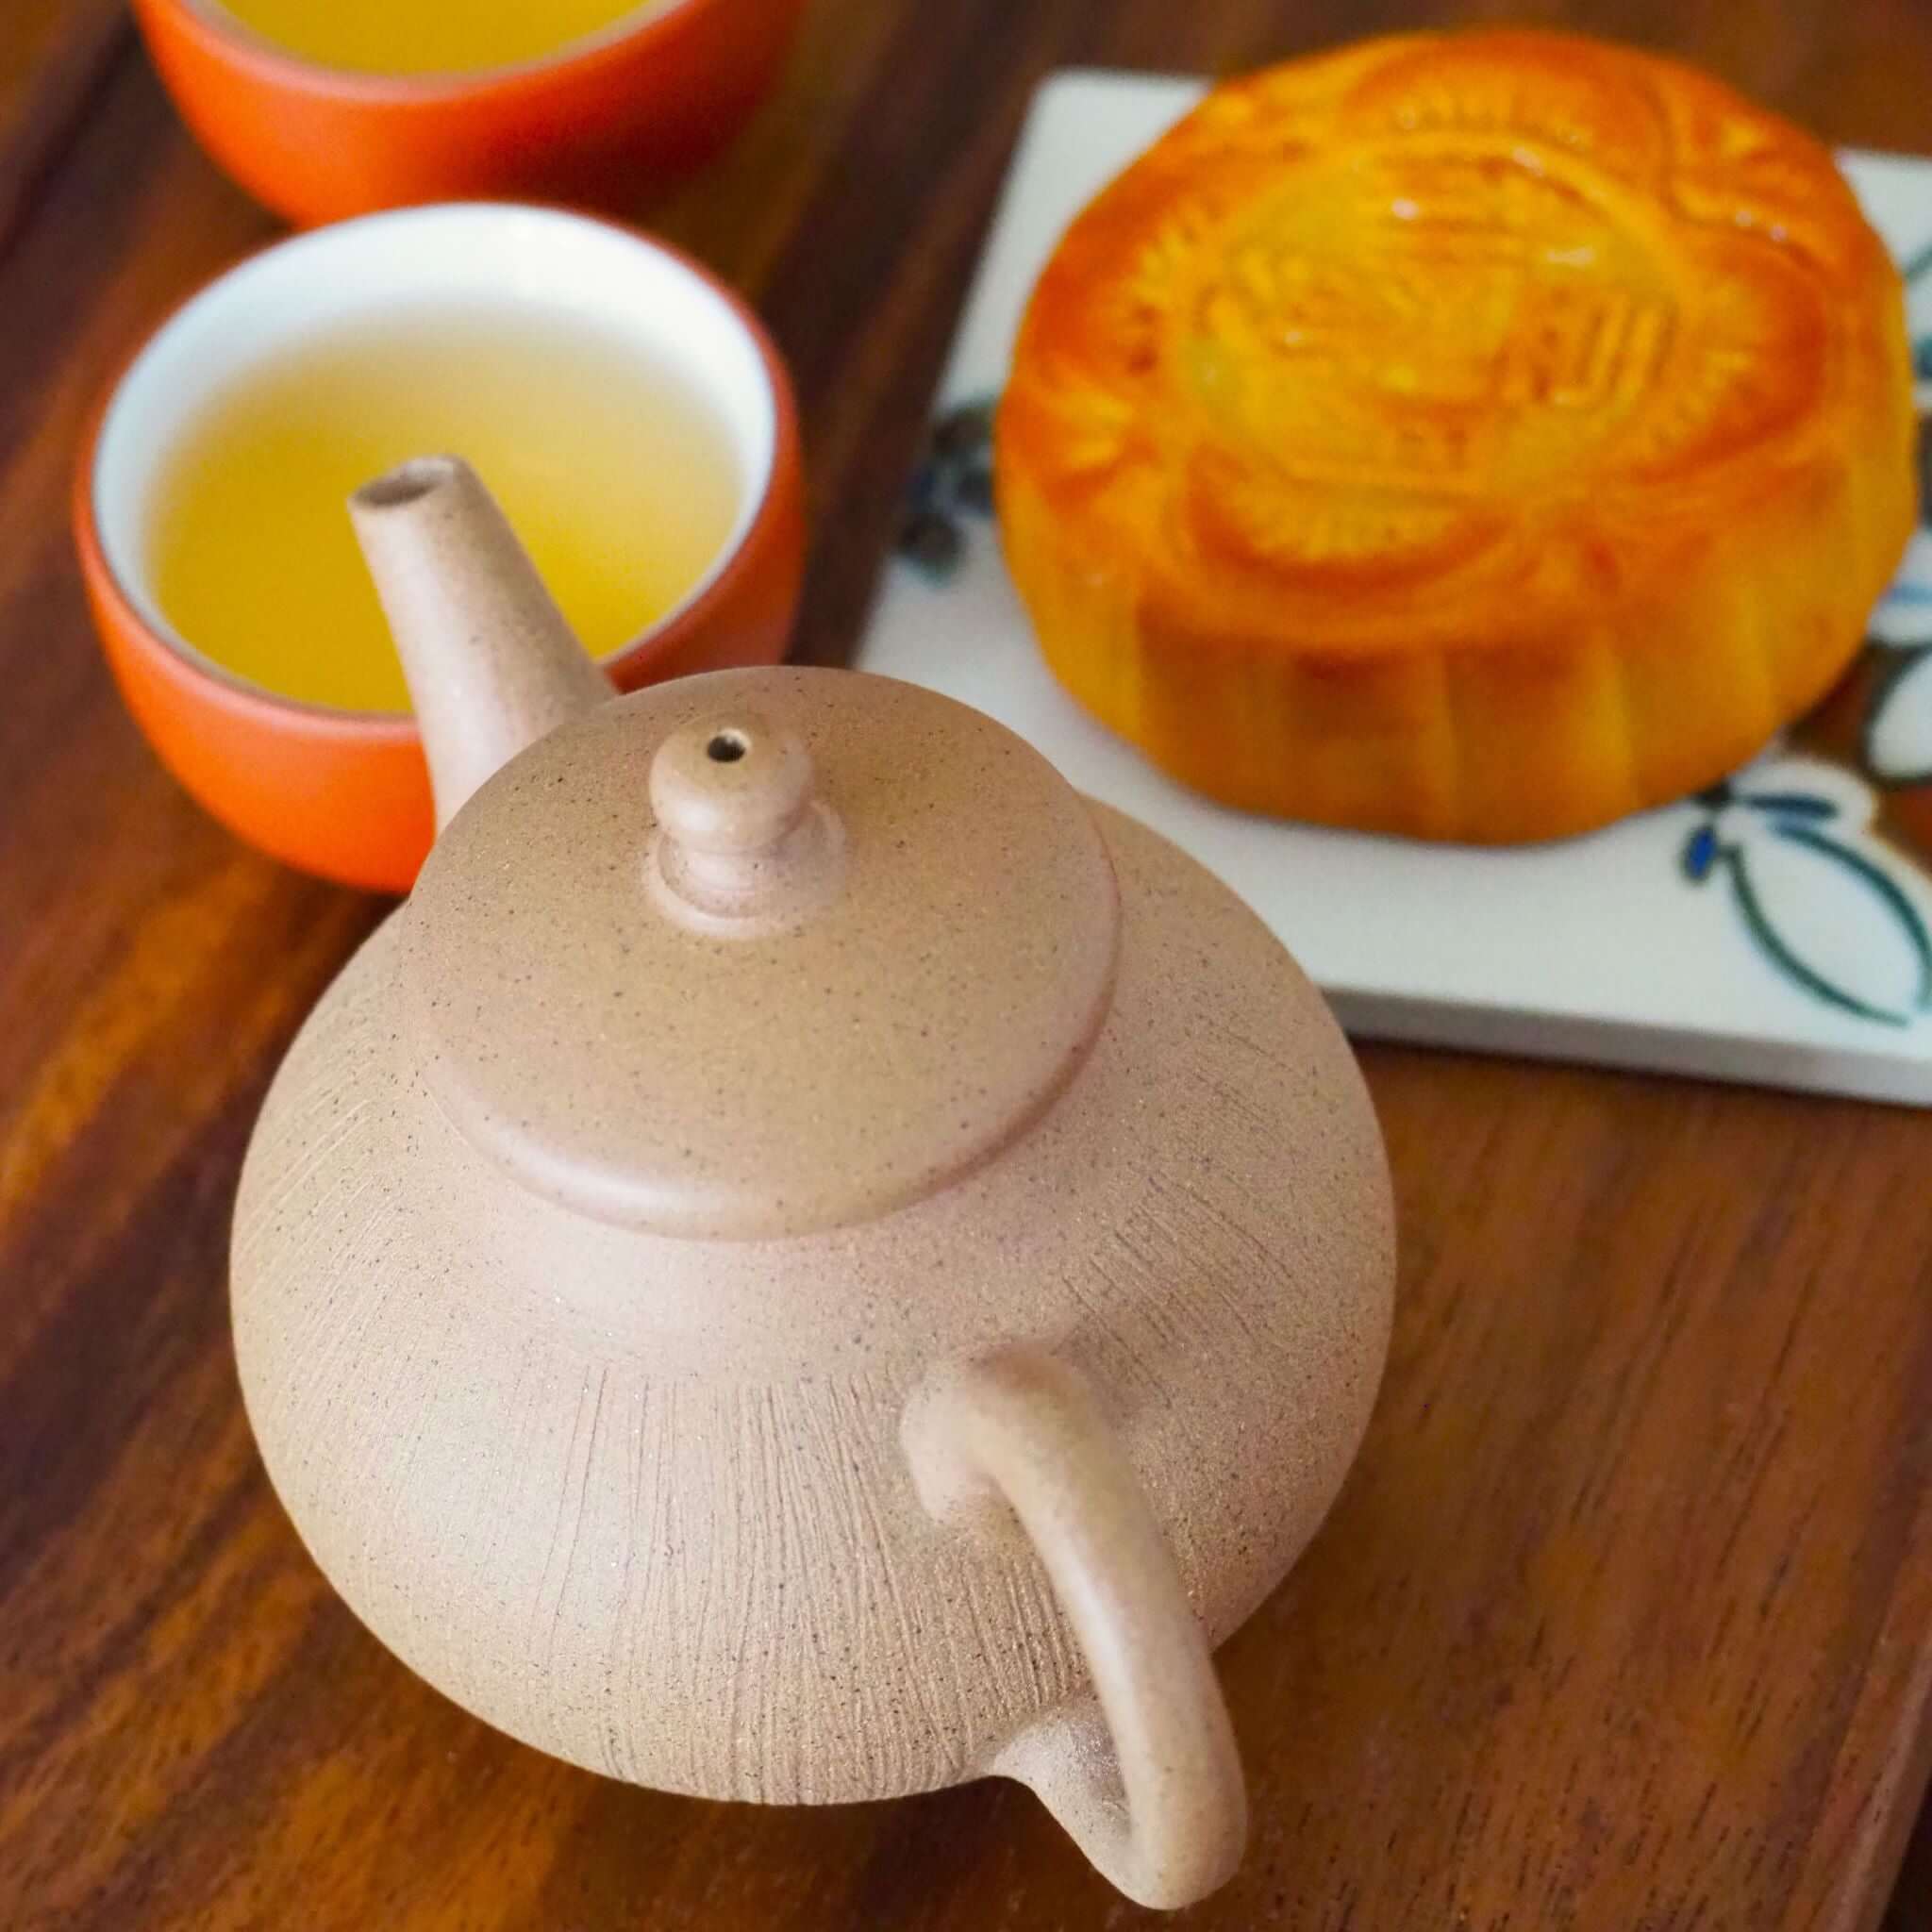 鈞釉 急須 茶壺 茶道具 陶器 茶器 台湾 贈り物 - キッチン、台所用品